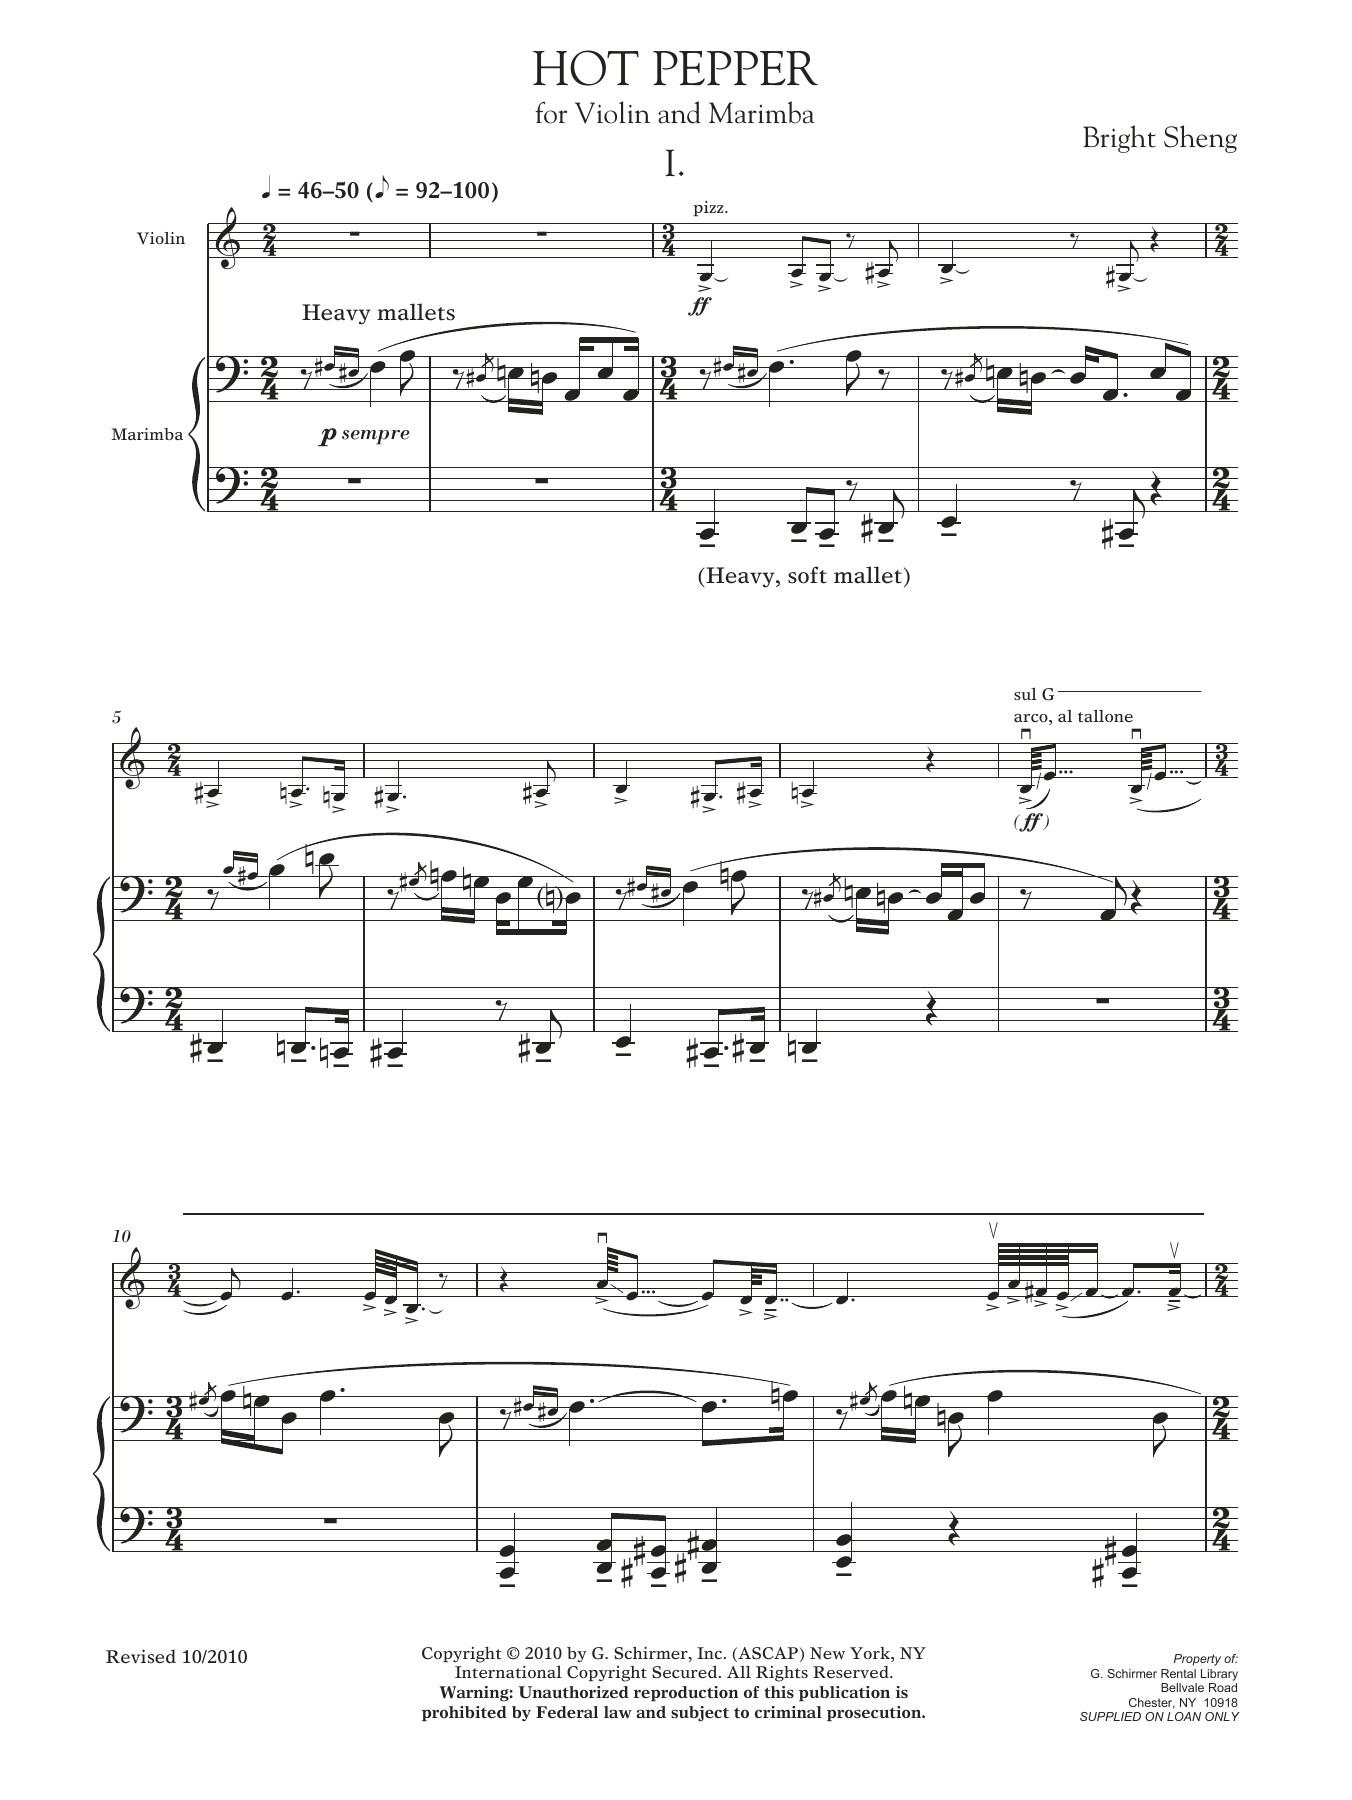 Bright Sheng Hot Pepper sheet music notes printable PDF score